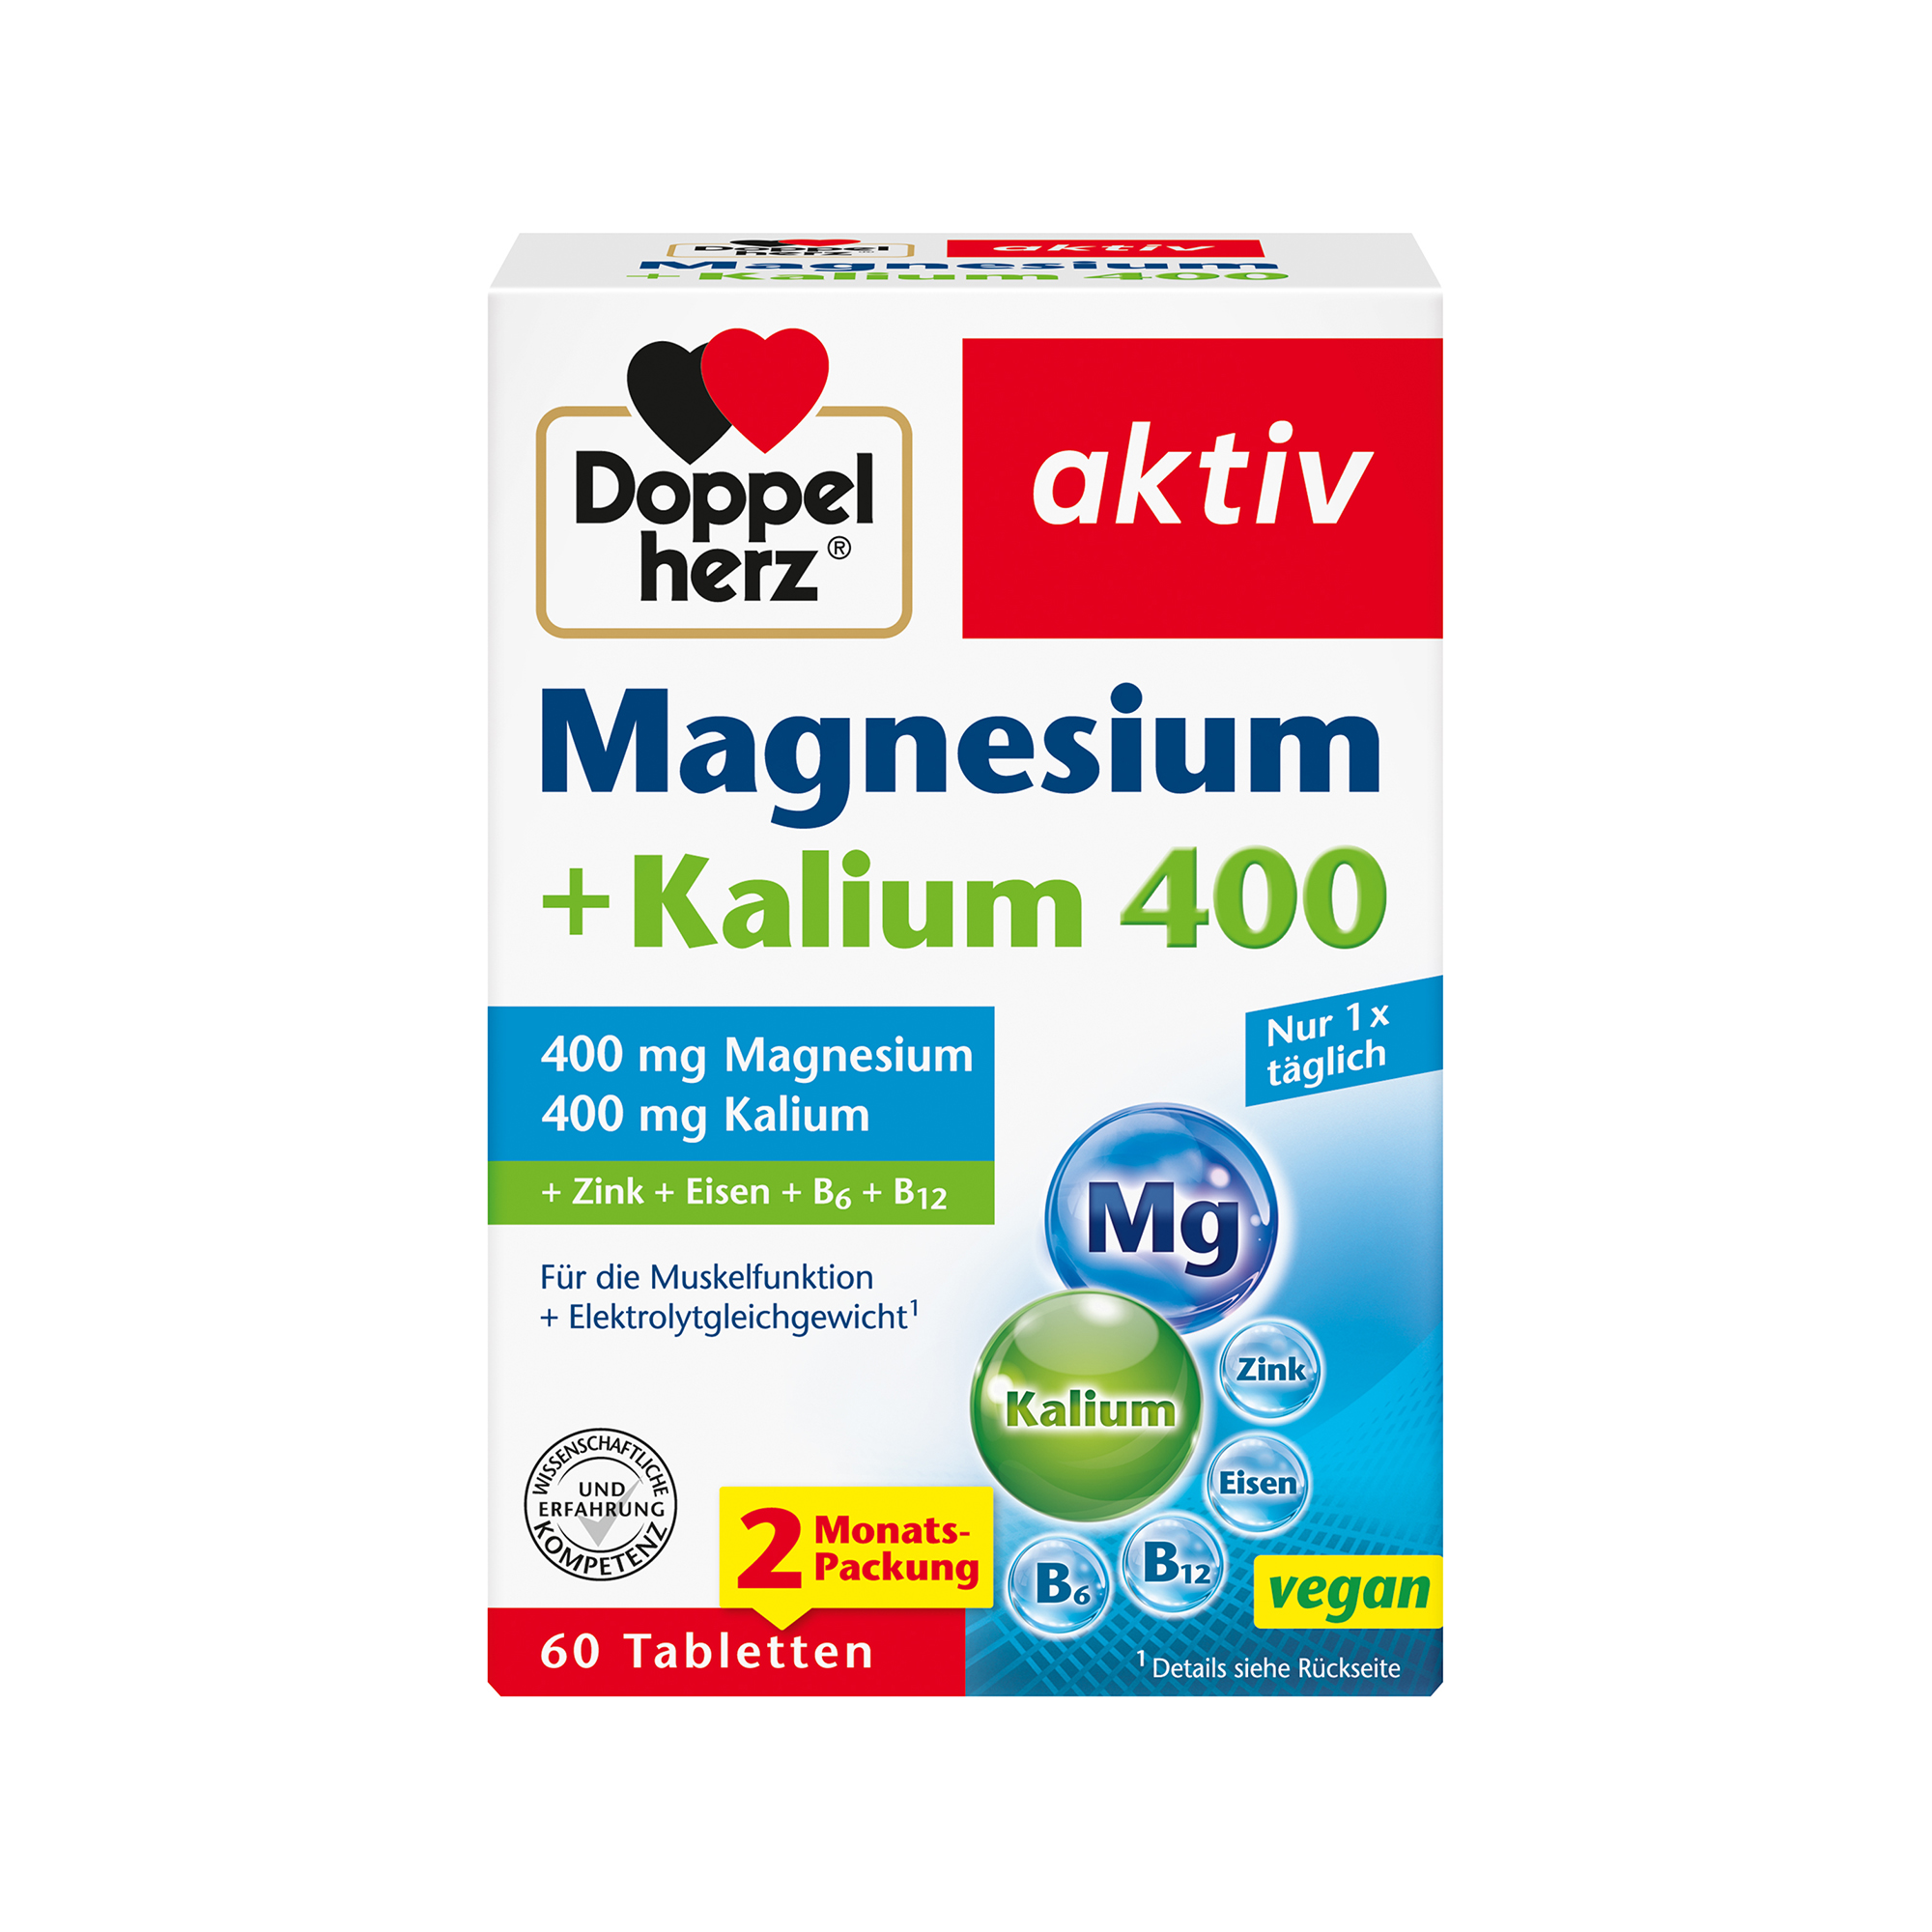 Doppelherz aktiv Magnesium 400 + Kalium, 60 Tabletten